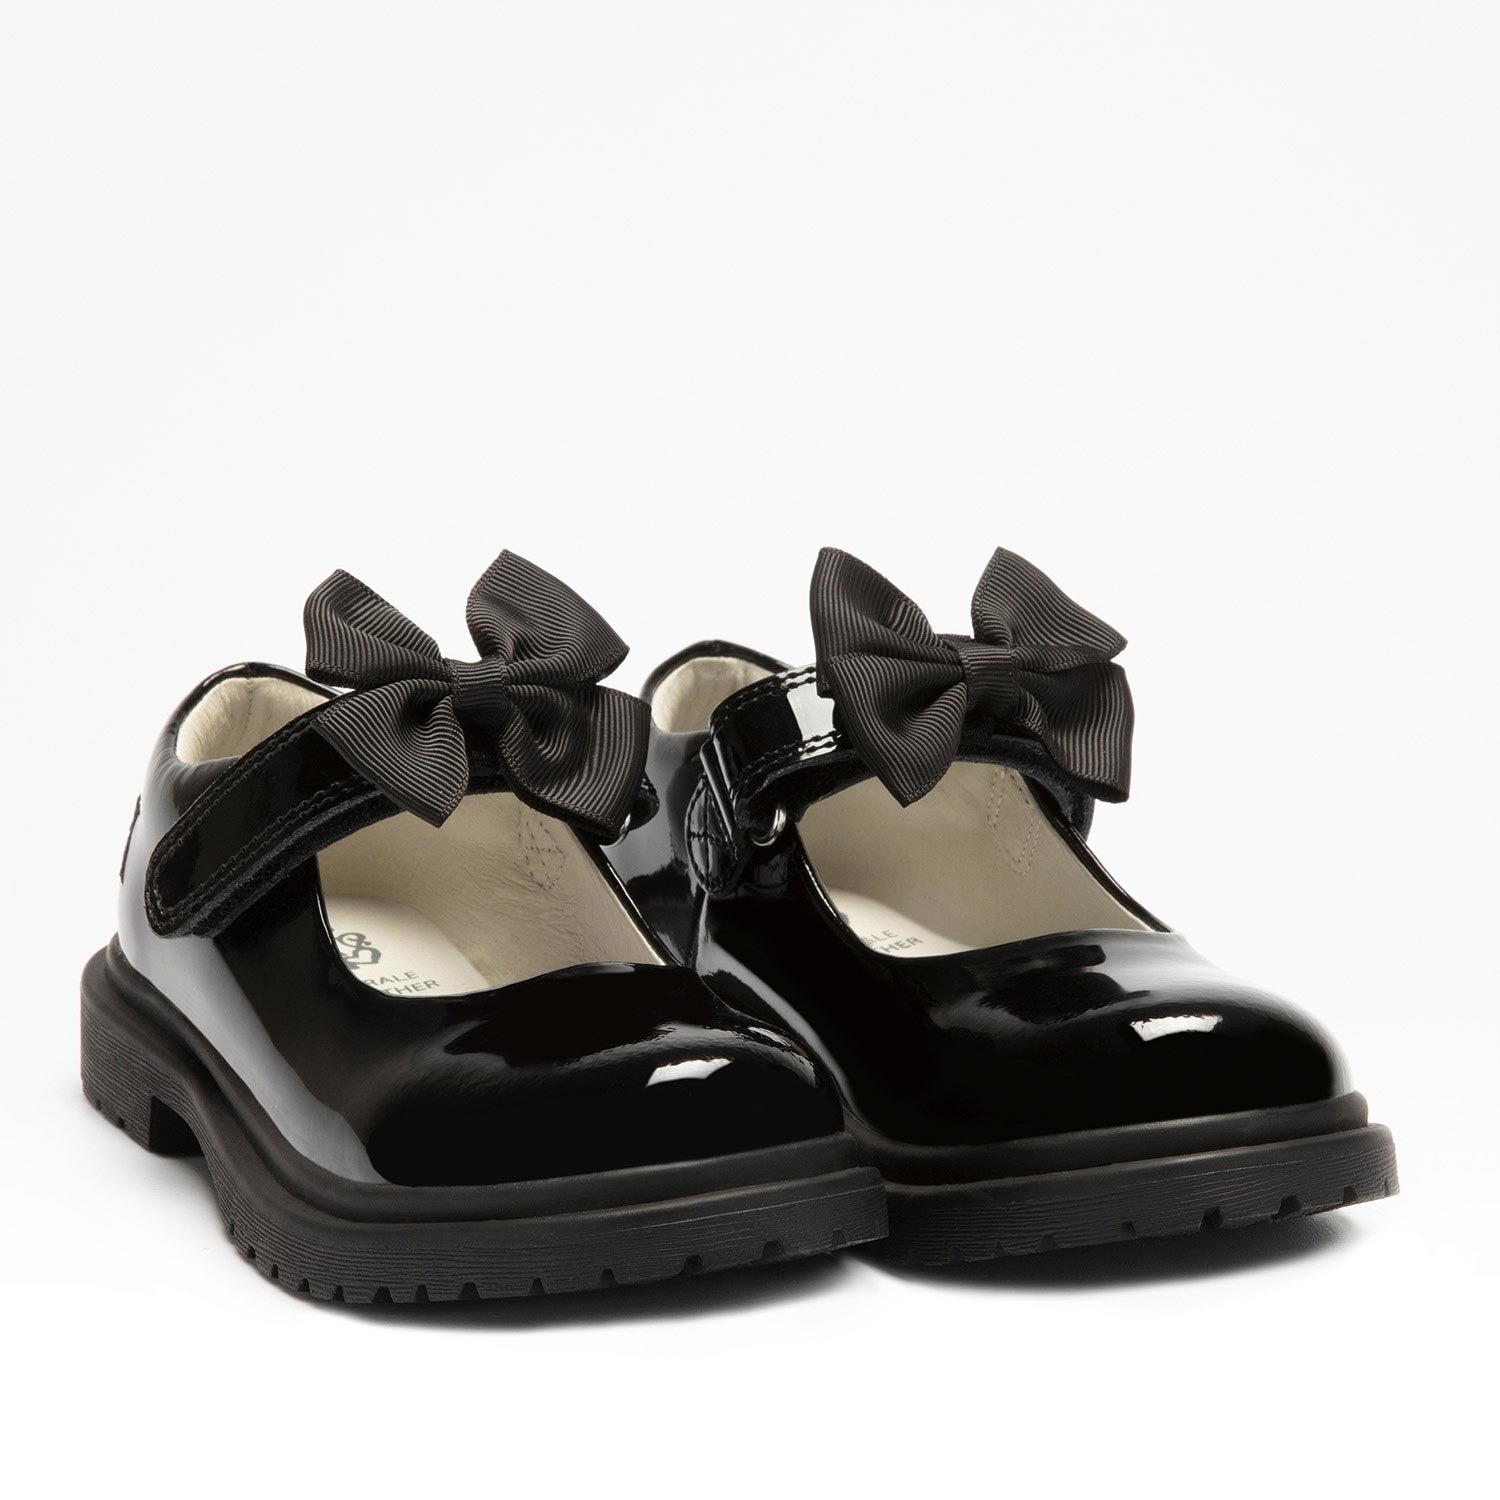 Lelli Kelly Maisie Black Patent Girls School Shoes